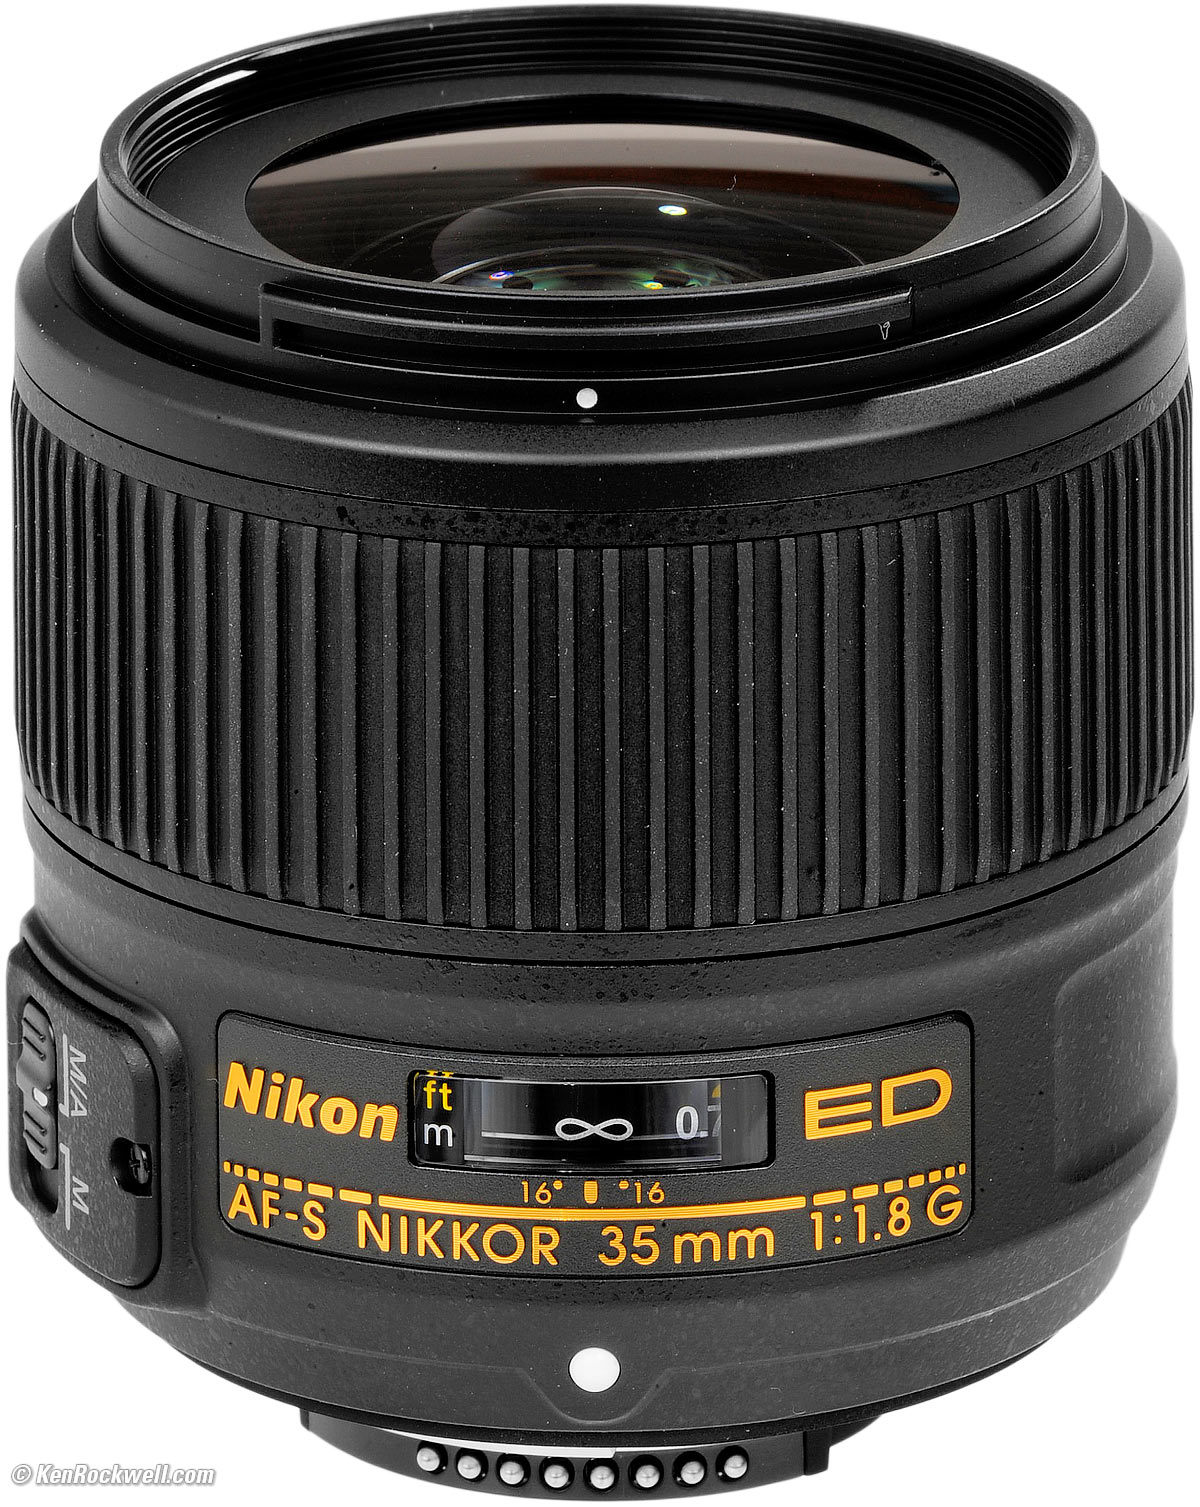 Nikon 35mm f/1.8 G FX Review